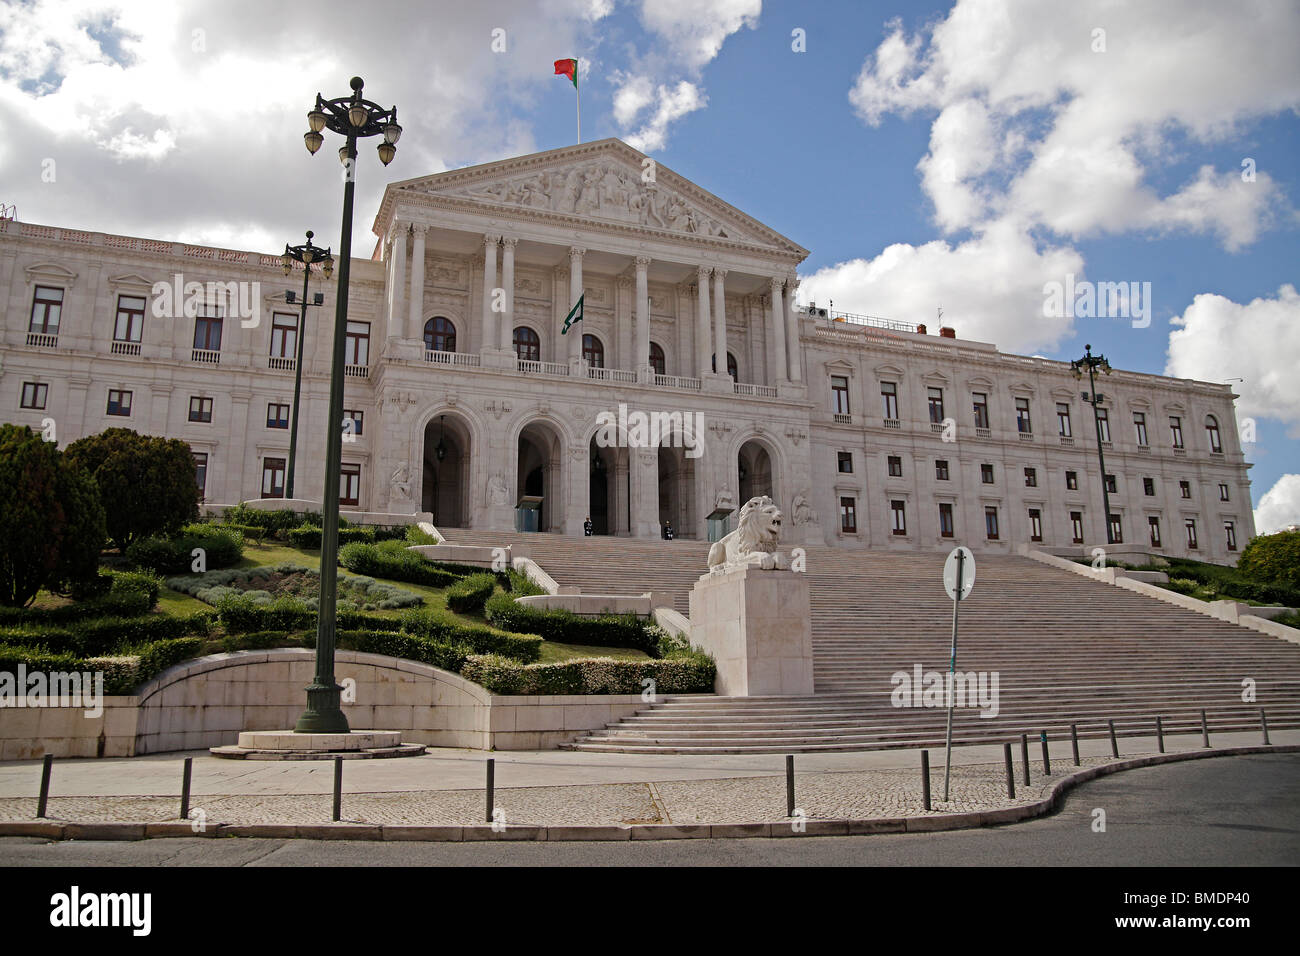 Le Parlement portugais Assembleia da Republica ou Palacio de São Bento à Lisbonne, Portugal, Europe Banque D'Images